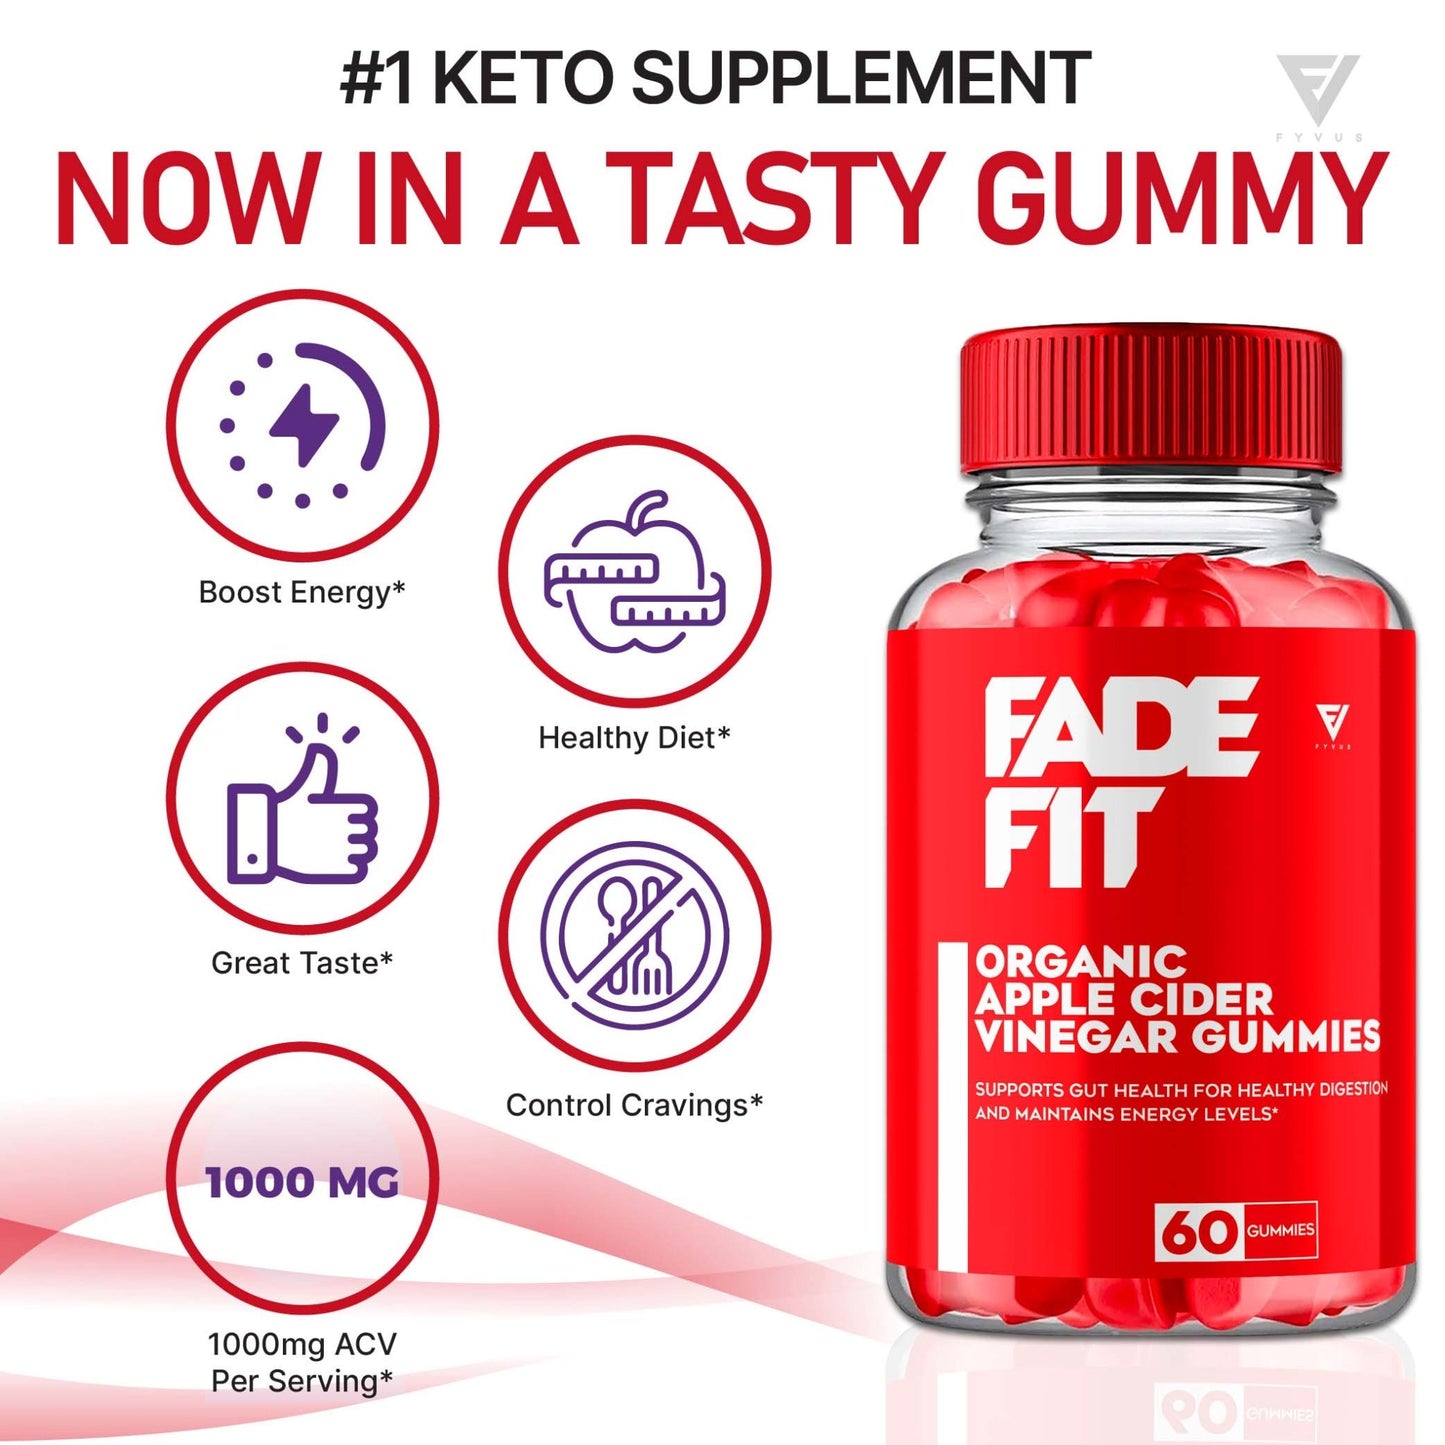 Fade Fit - Keto ACV Gummies - Vitamin Place